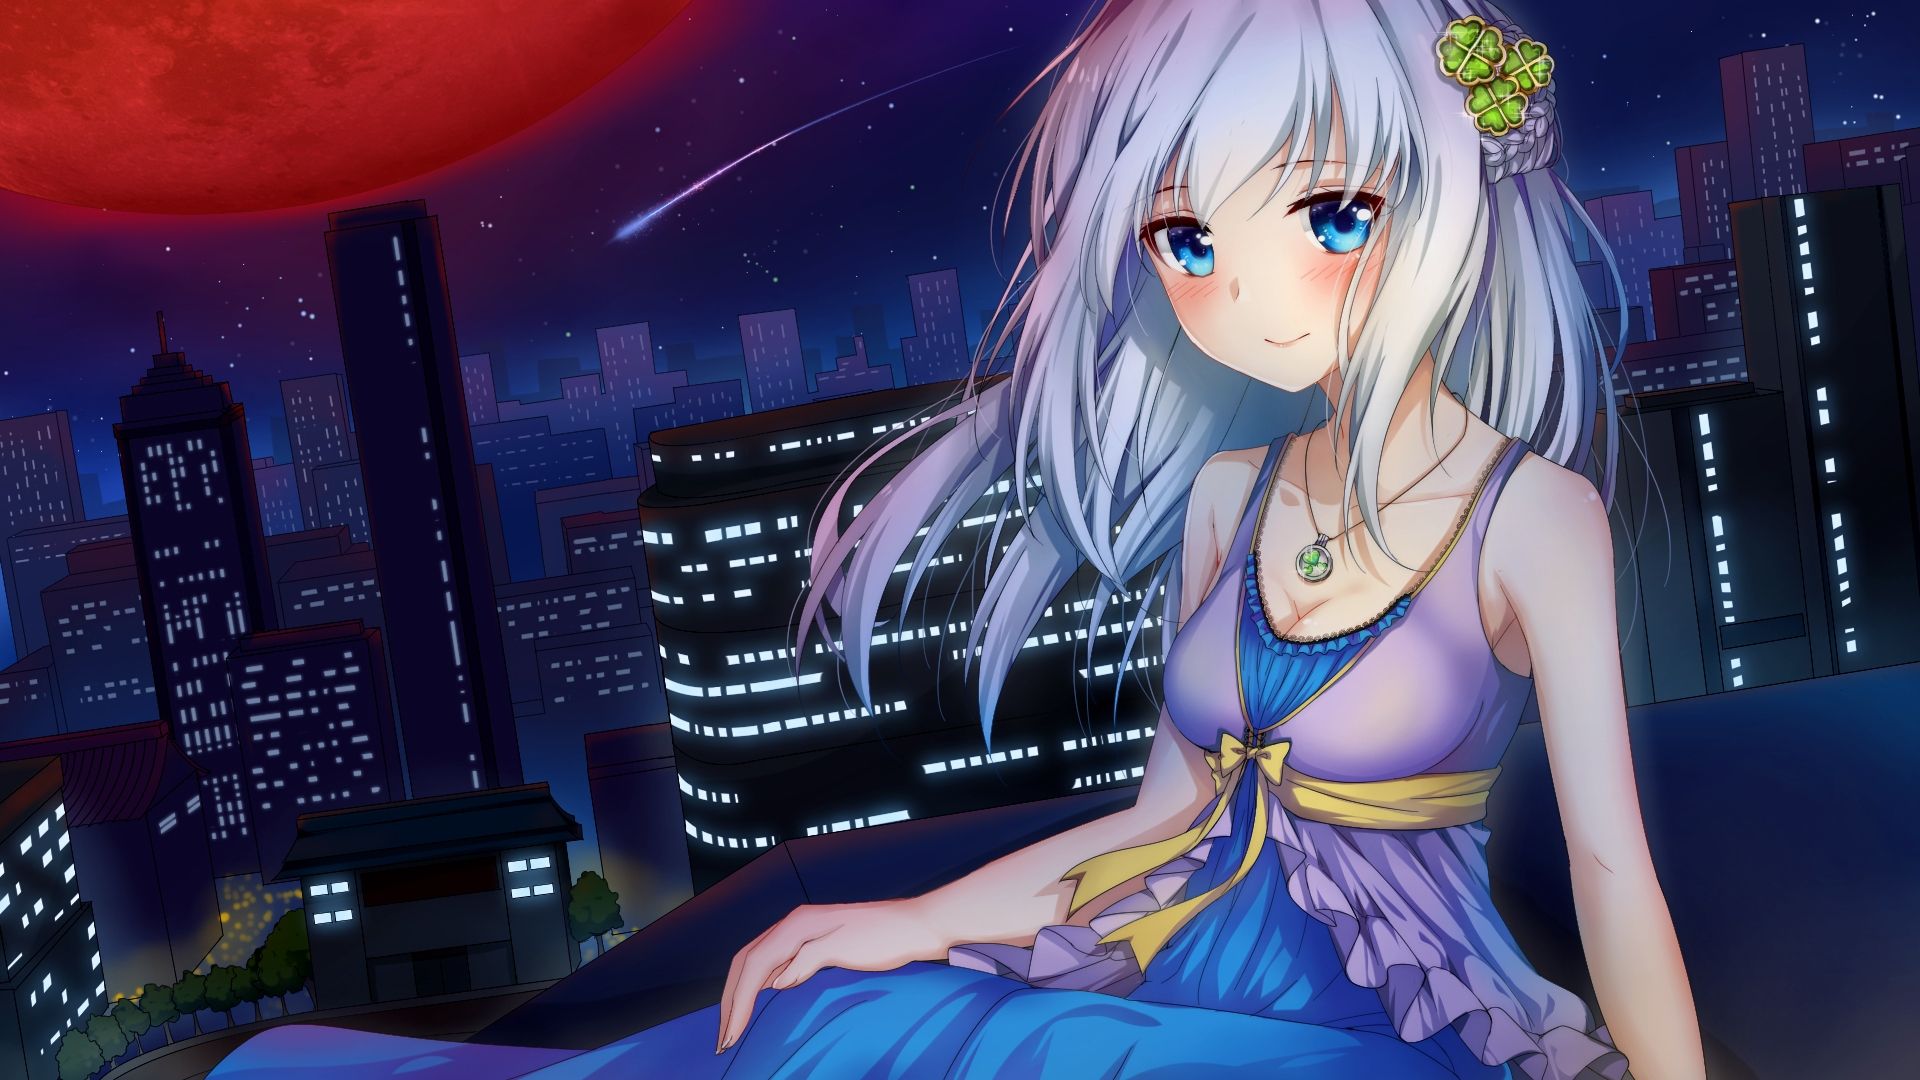 Download 1920x1080 Anime Girl, Dress, Akatsuki, Red Moon, Cityscape, Smiling, White Hair, Cute Wallpaper for Widescreen